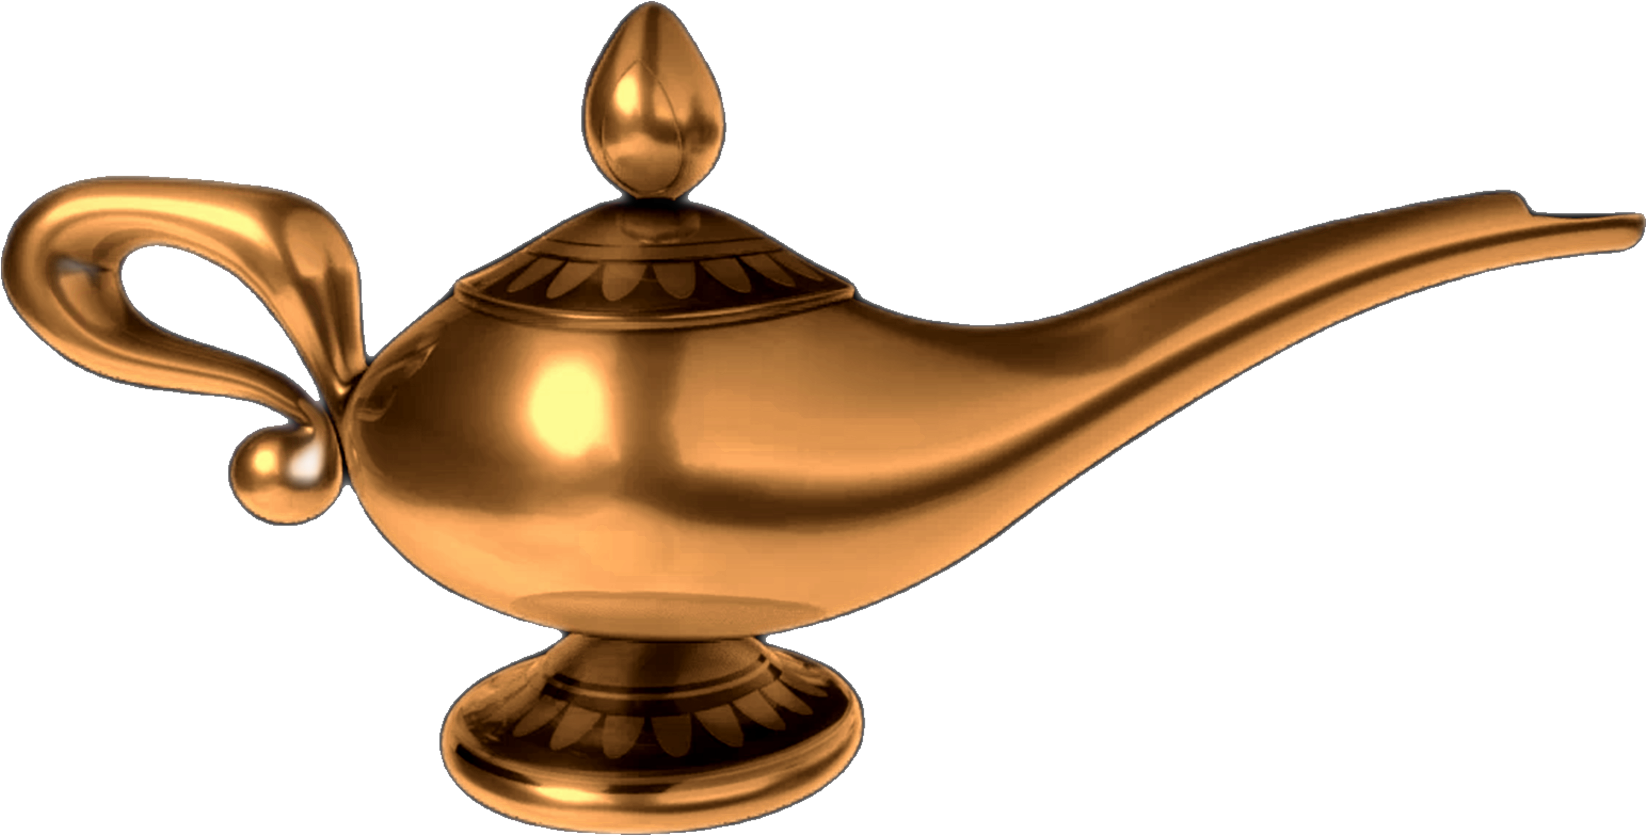 Genie's Lamp (Disney's Aladdin) by psycosid09 on DeviantArt